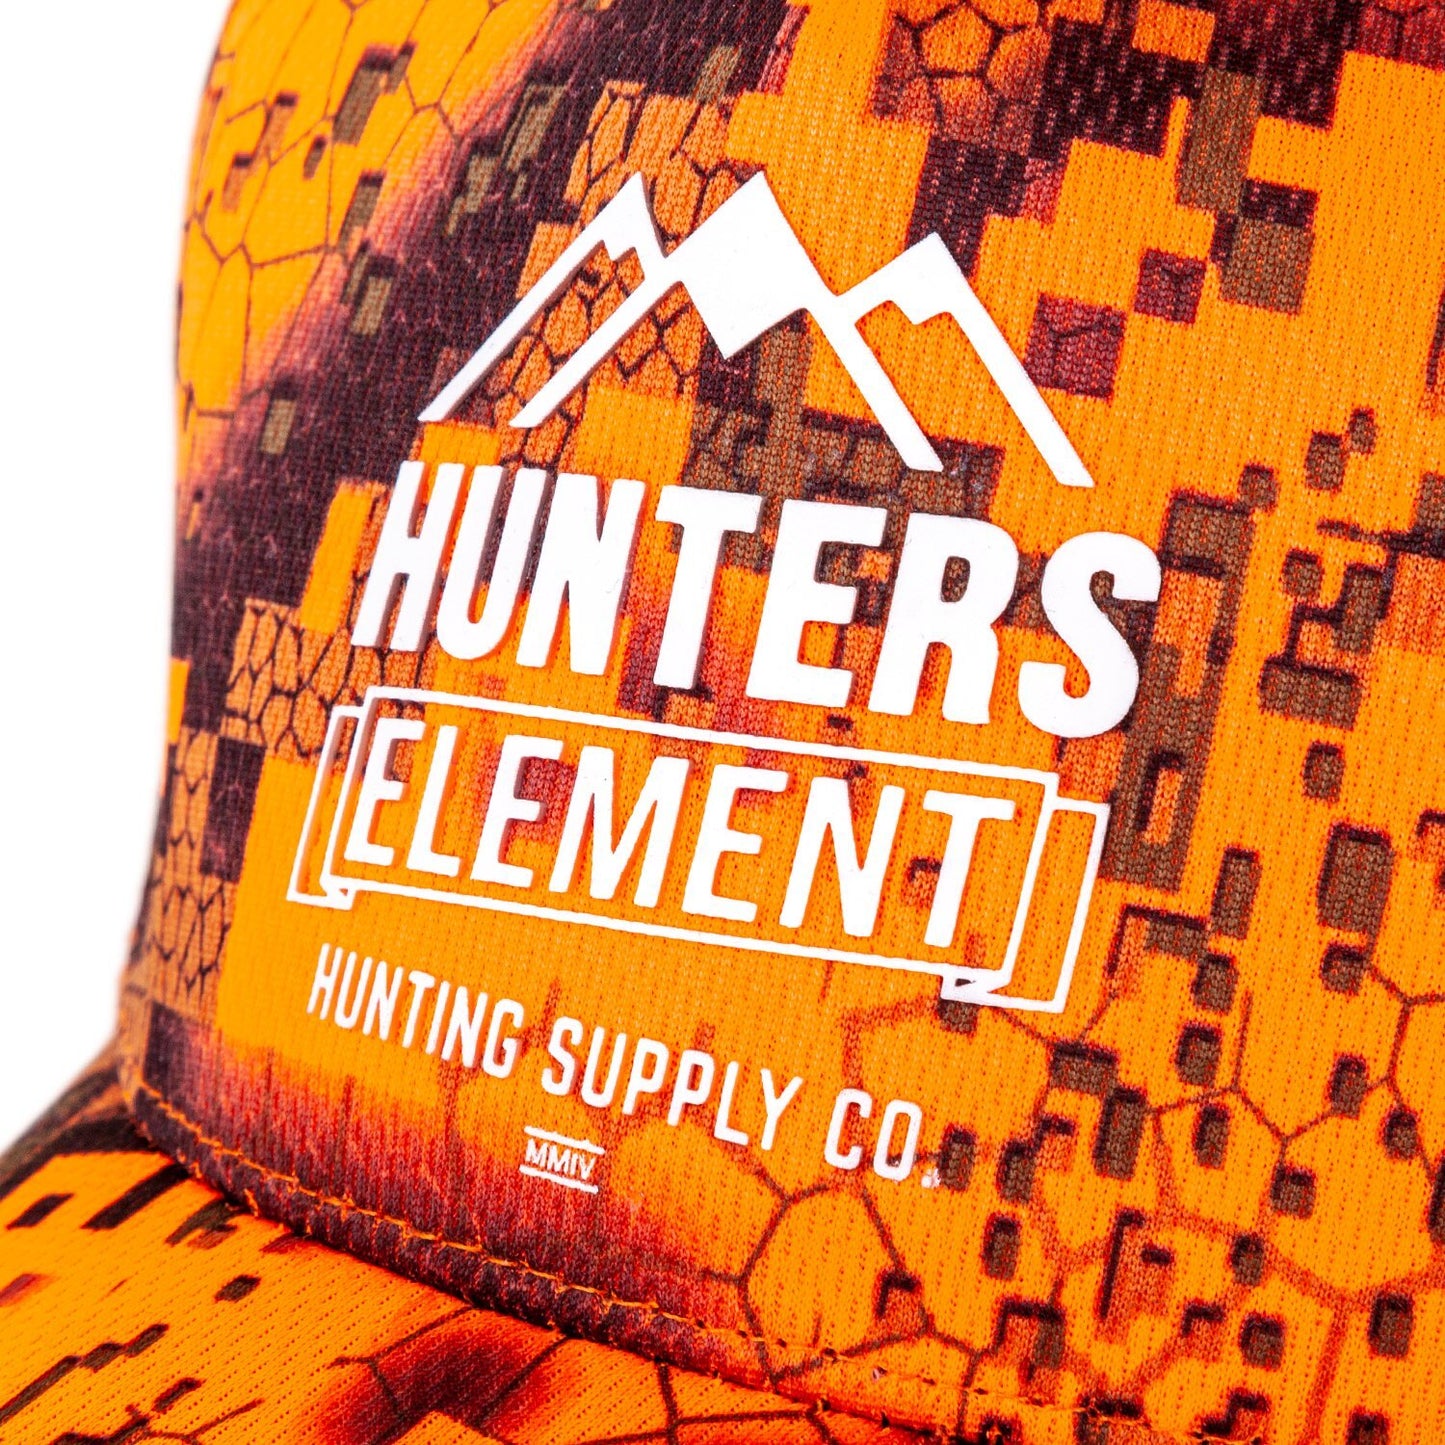 Hunters Element Hunters Element Vista Cap - Desolve Fire #00701 Dark Orange